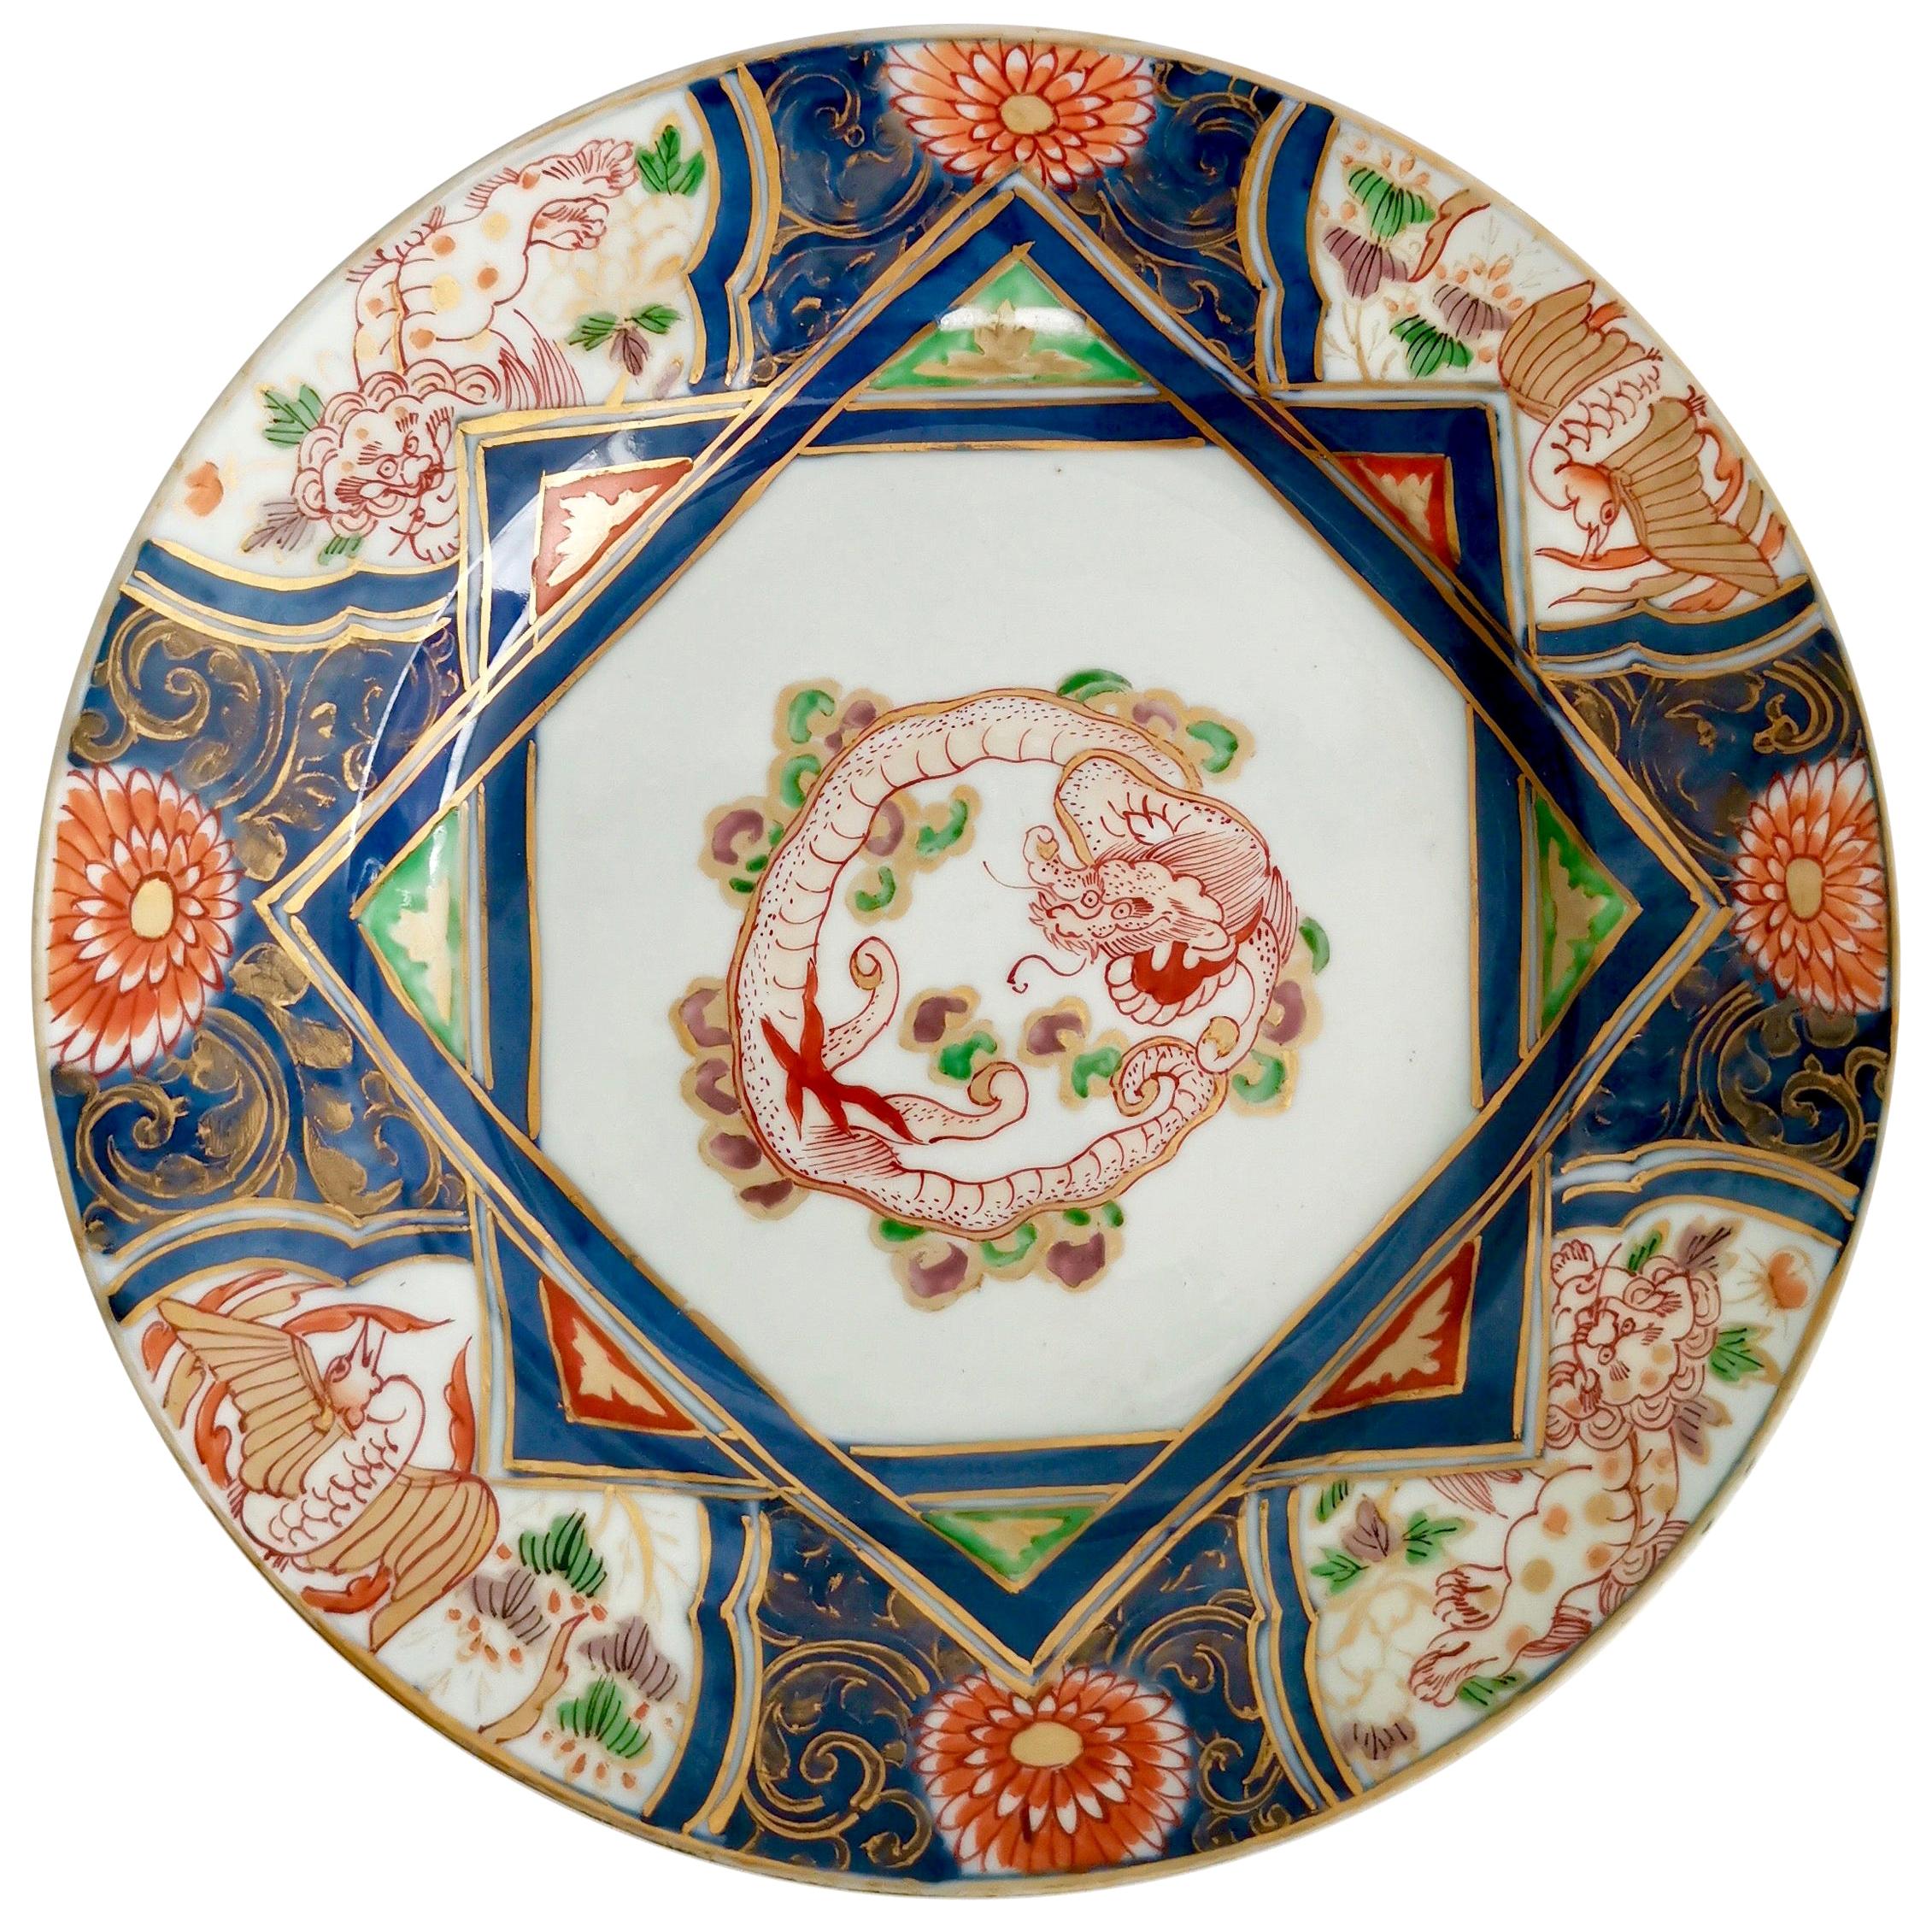 Japanese Imari Porcelain Plate with Dragon, Lions, Cranes, 17th C, Edo 1680-1700